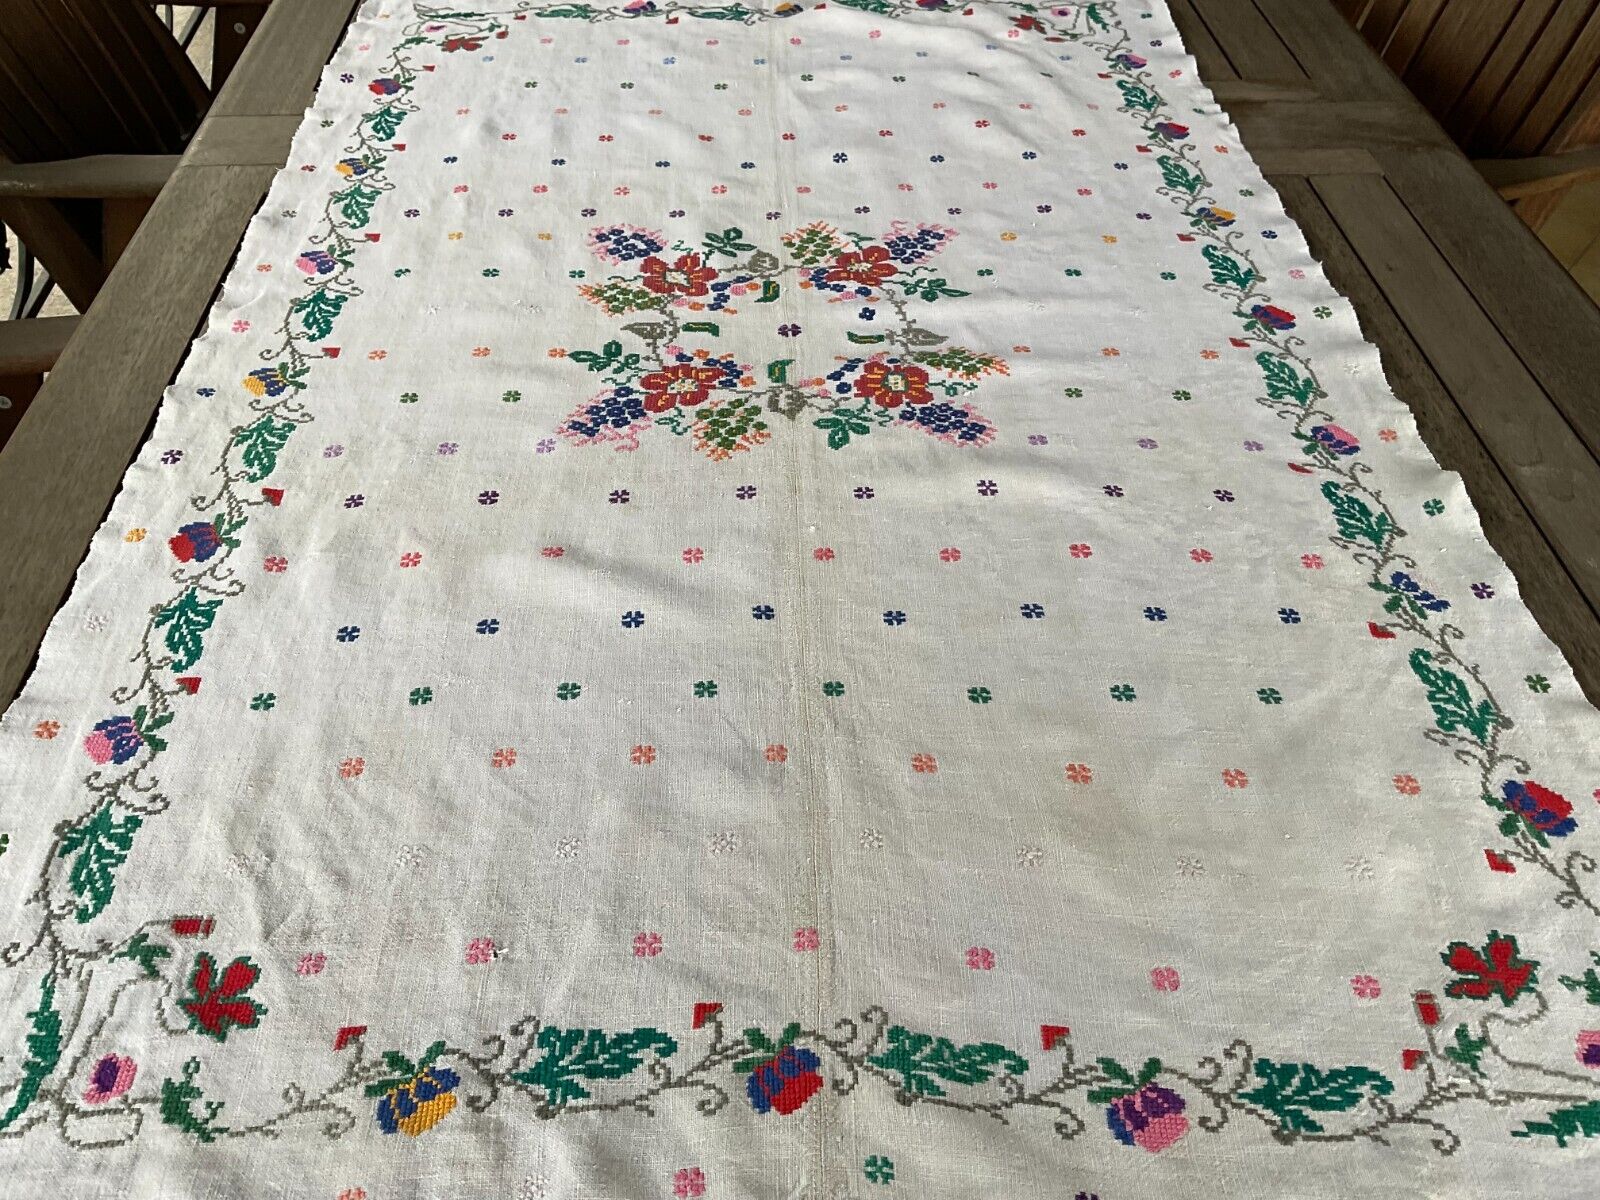 Antique Handwoven Hand Embroidered Tablecloth Homespun Linen Rustic Table Decor